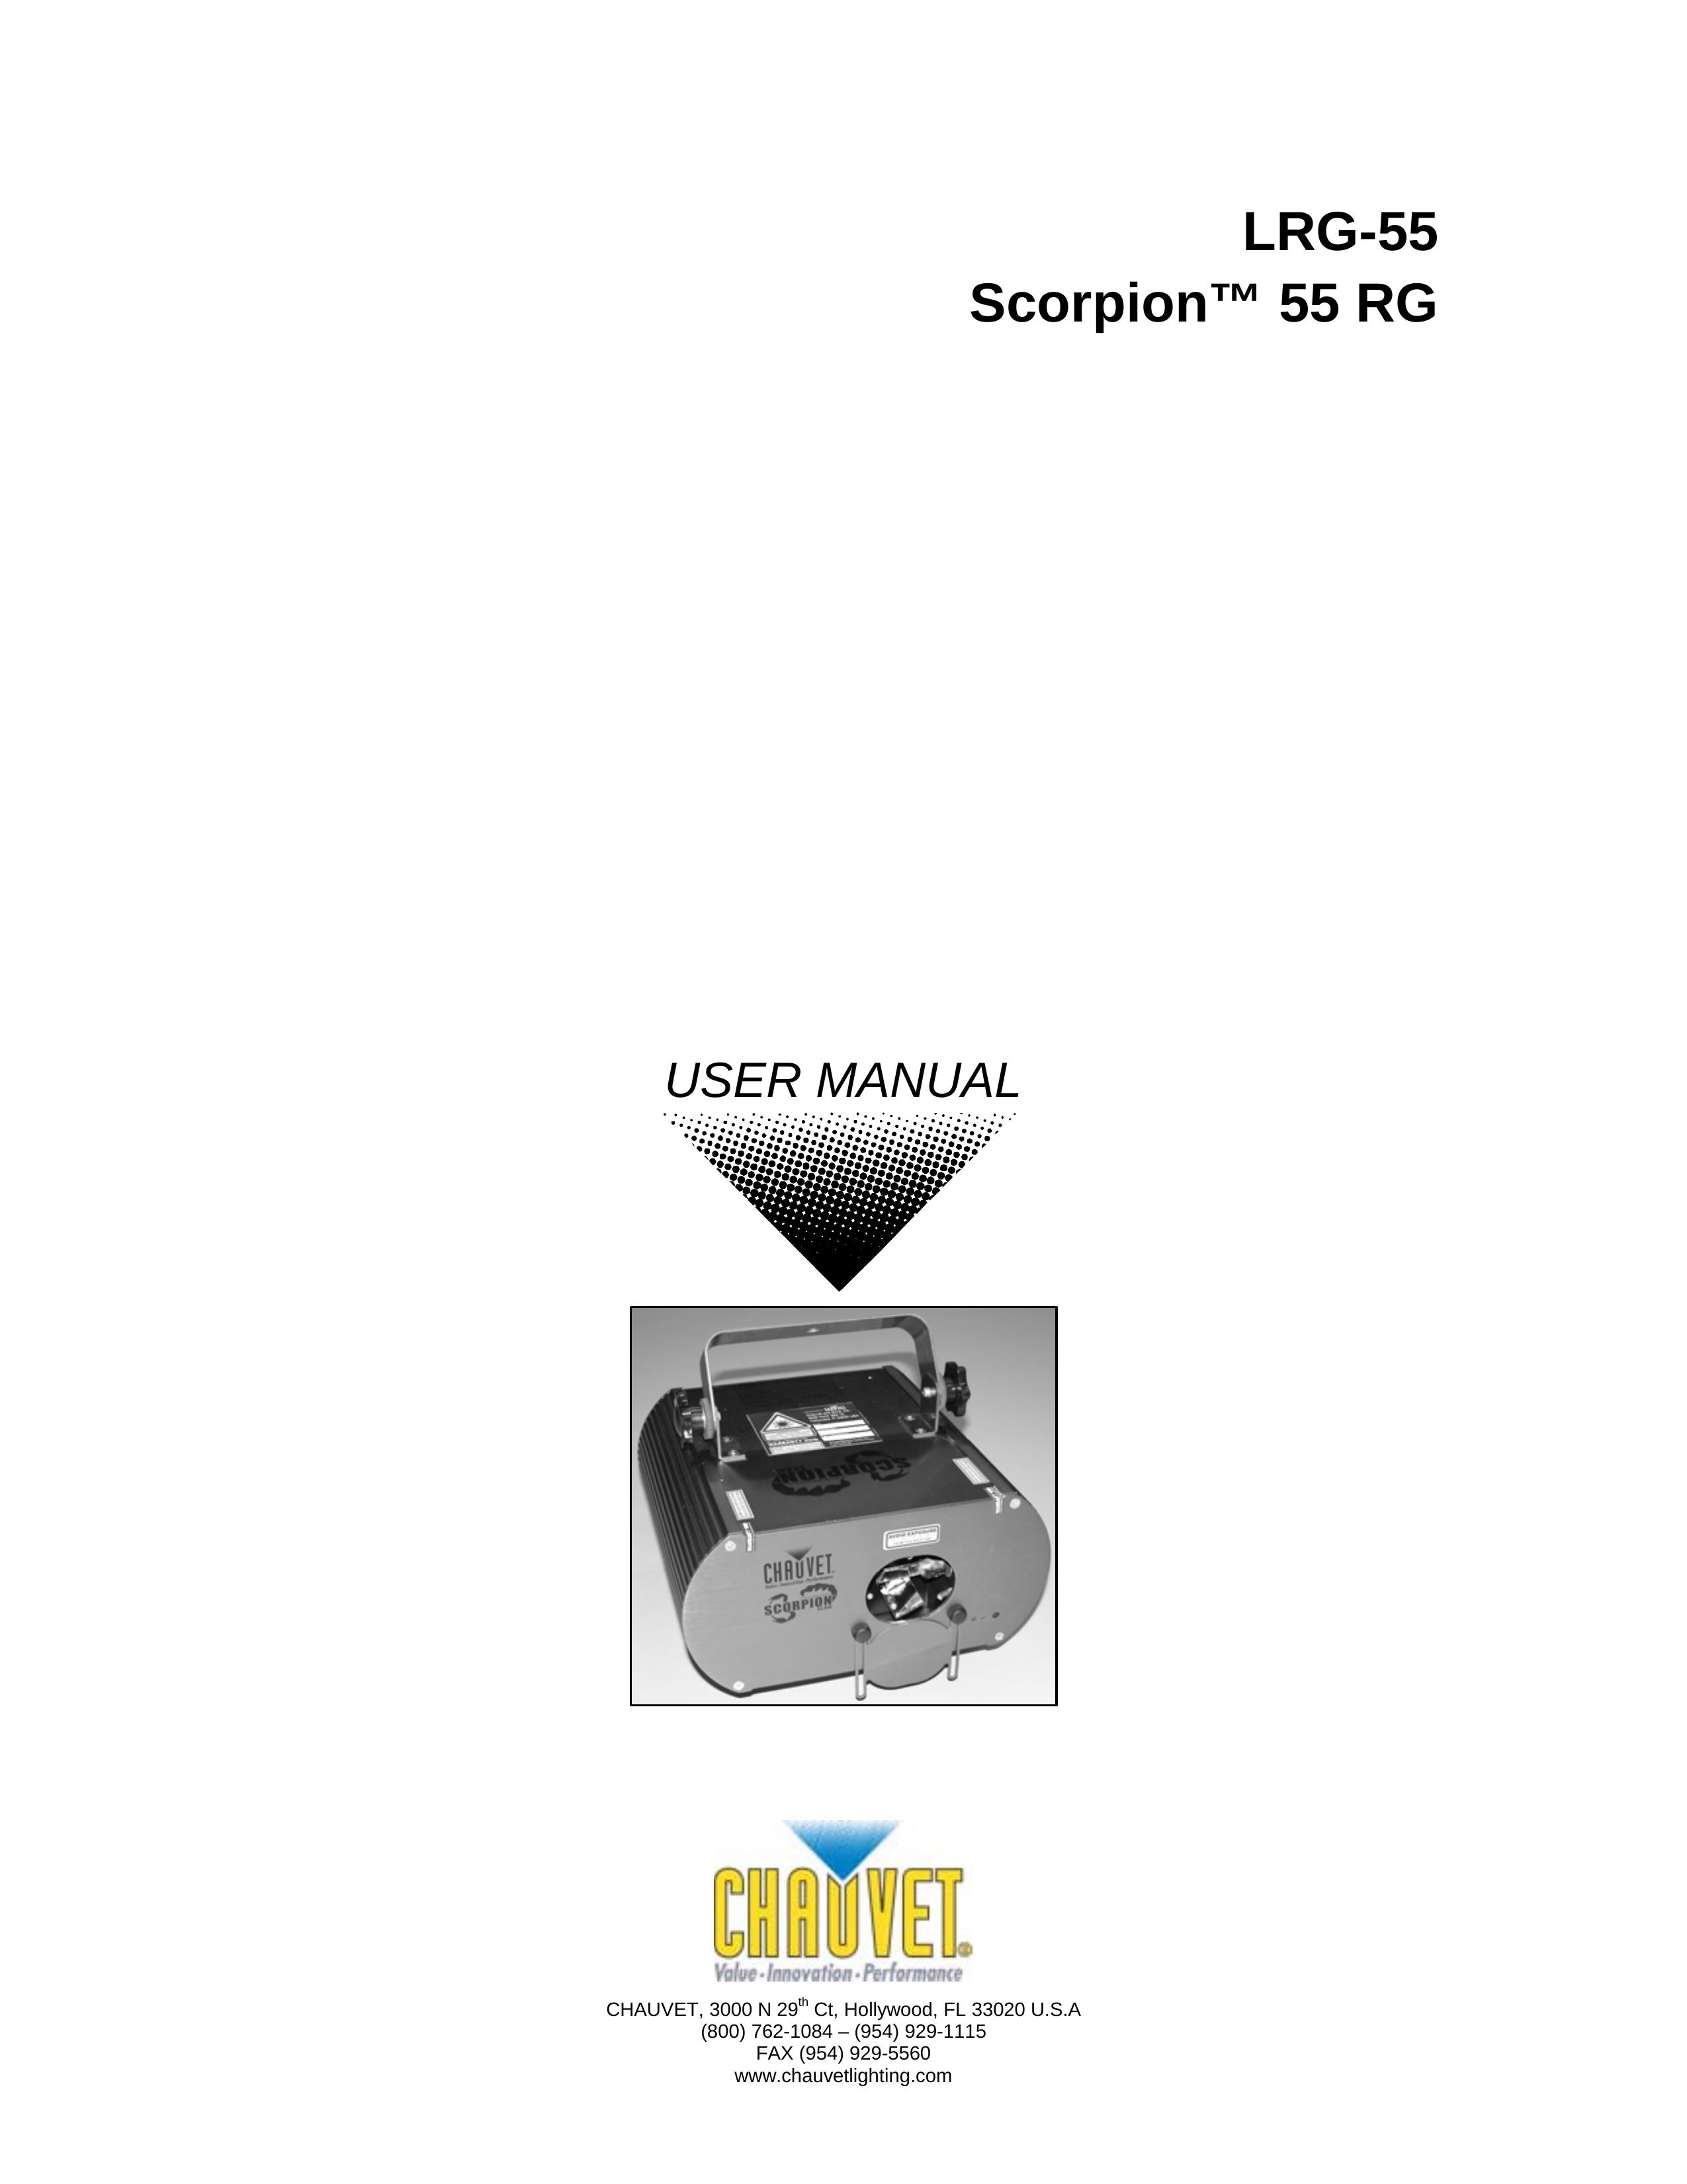 Chauvet LRG-55 Landscape Lighting User Manual